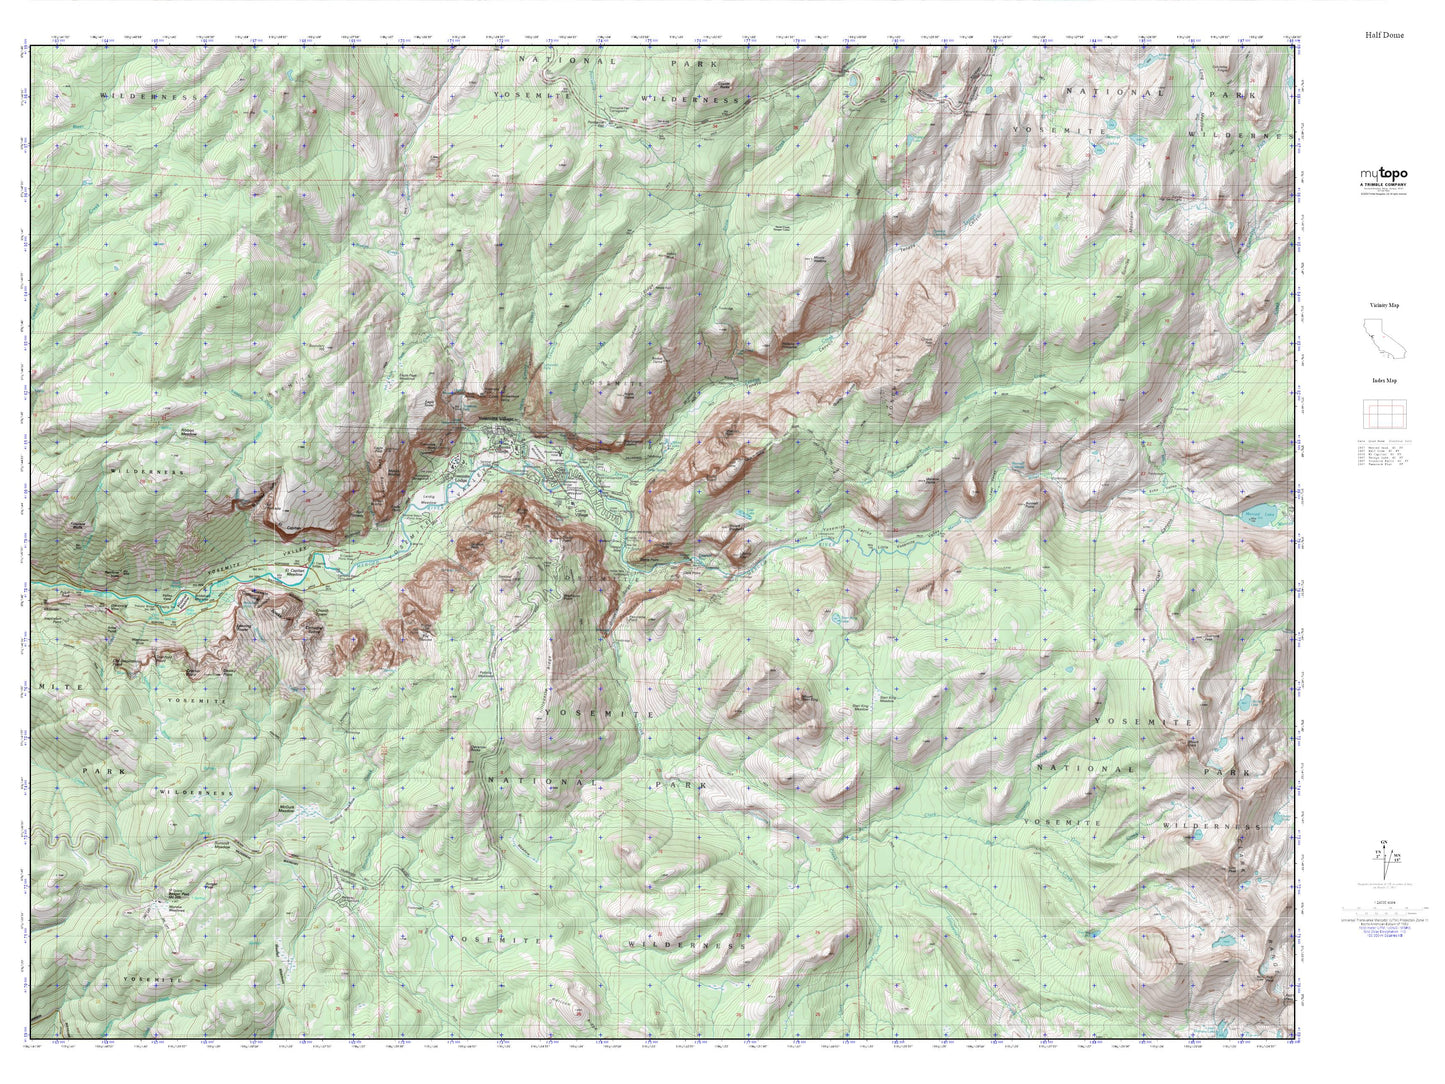 Half Dome MyTopo Explorer Series Map Image